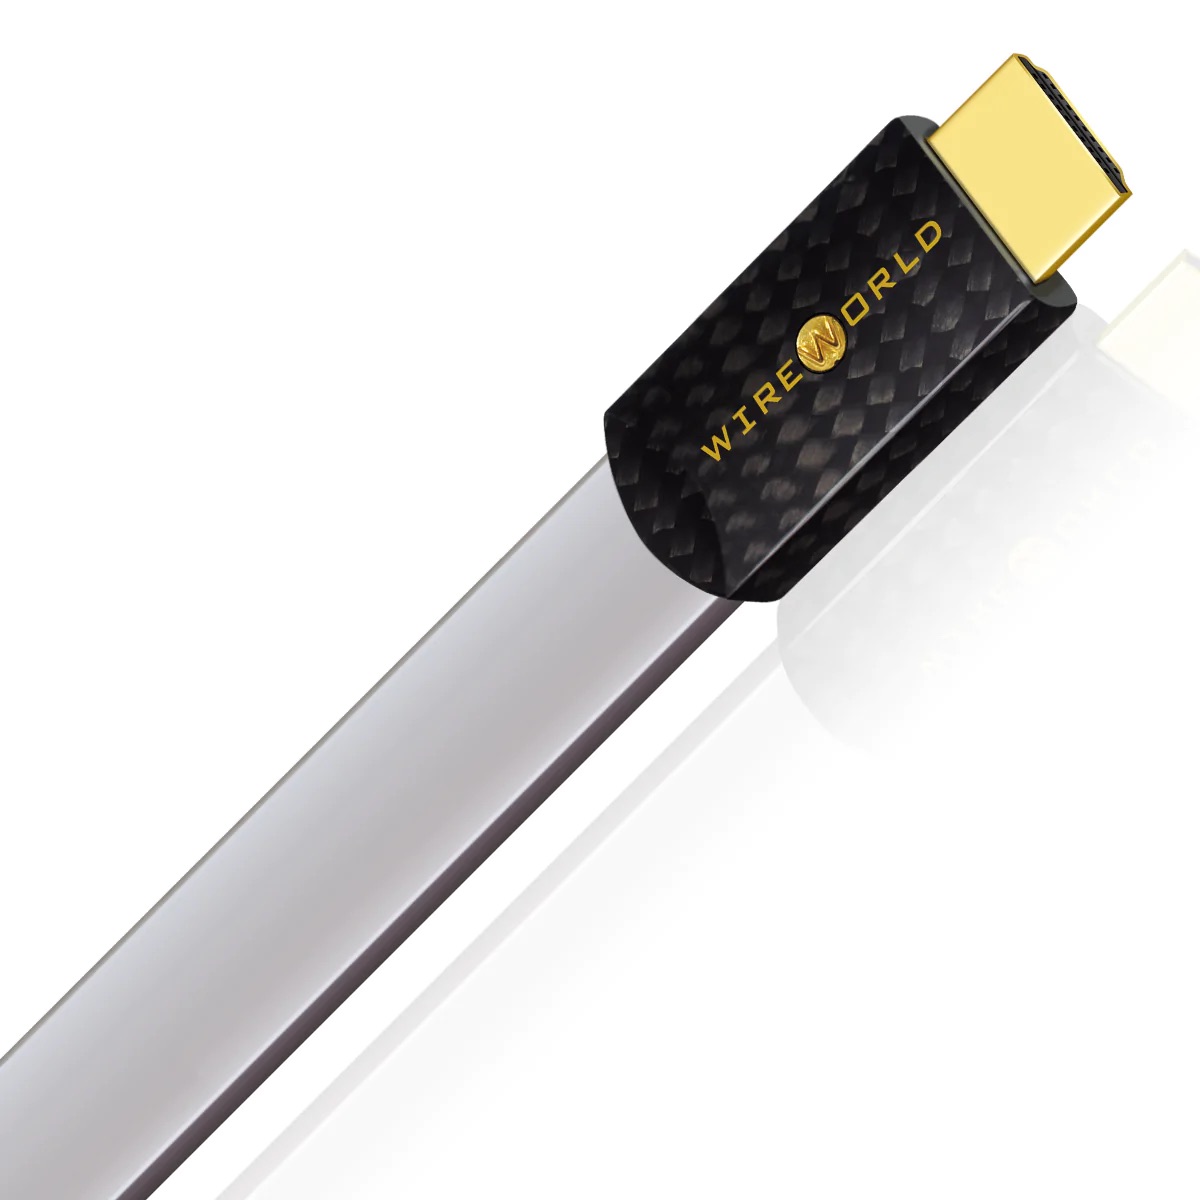 Wireworld Starlight Platinum 48 HDMI